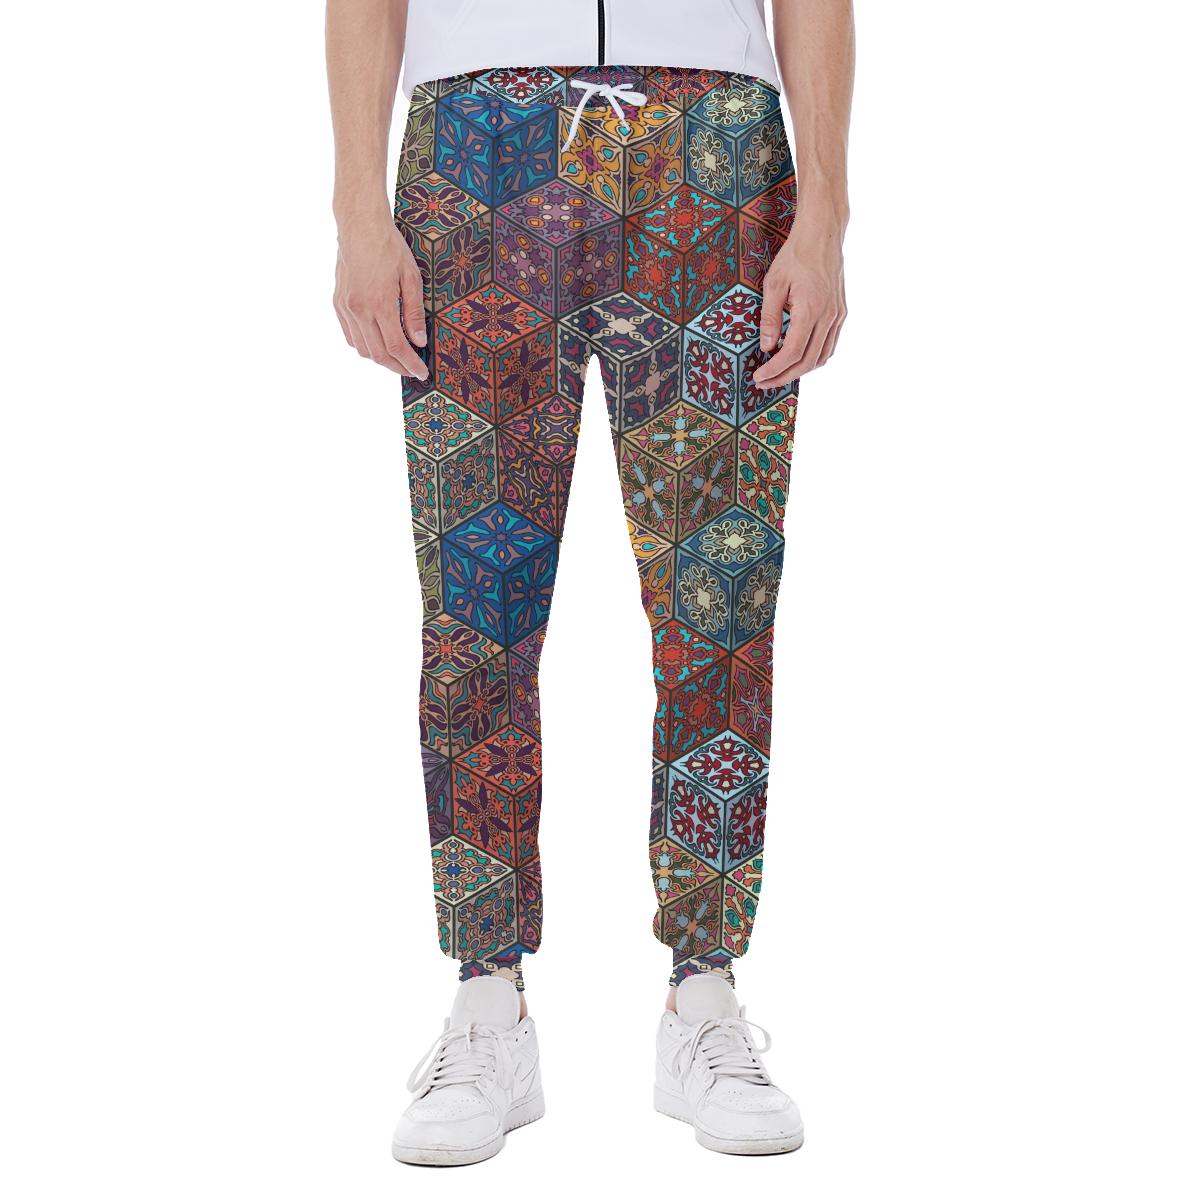 Mosaic Mandala Floral Elements Boho Print Men's Sweatpants